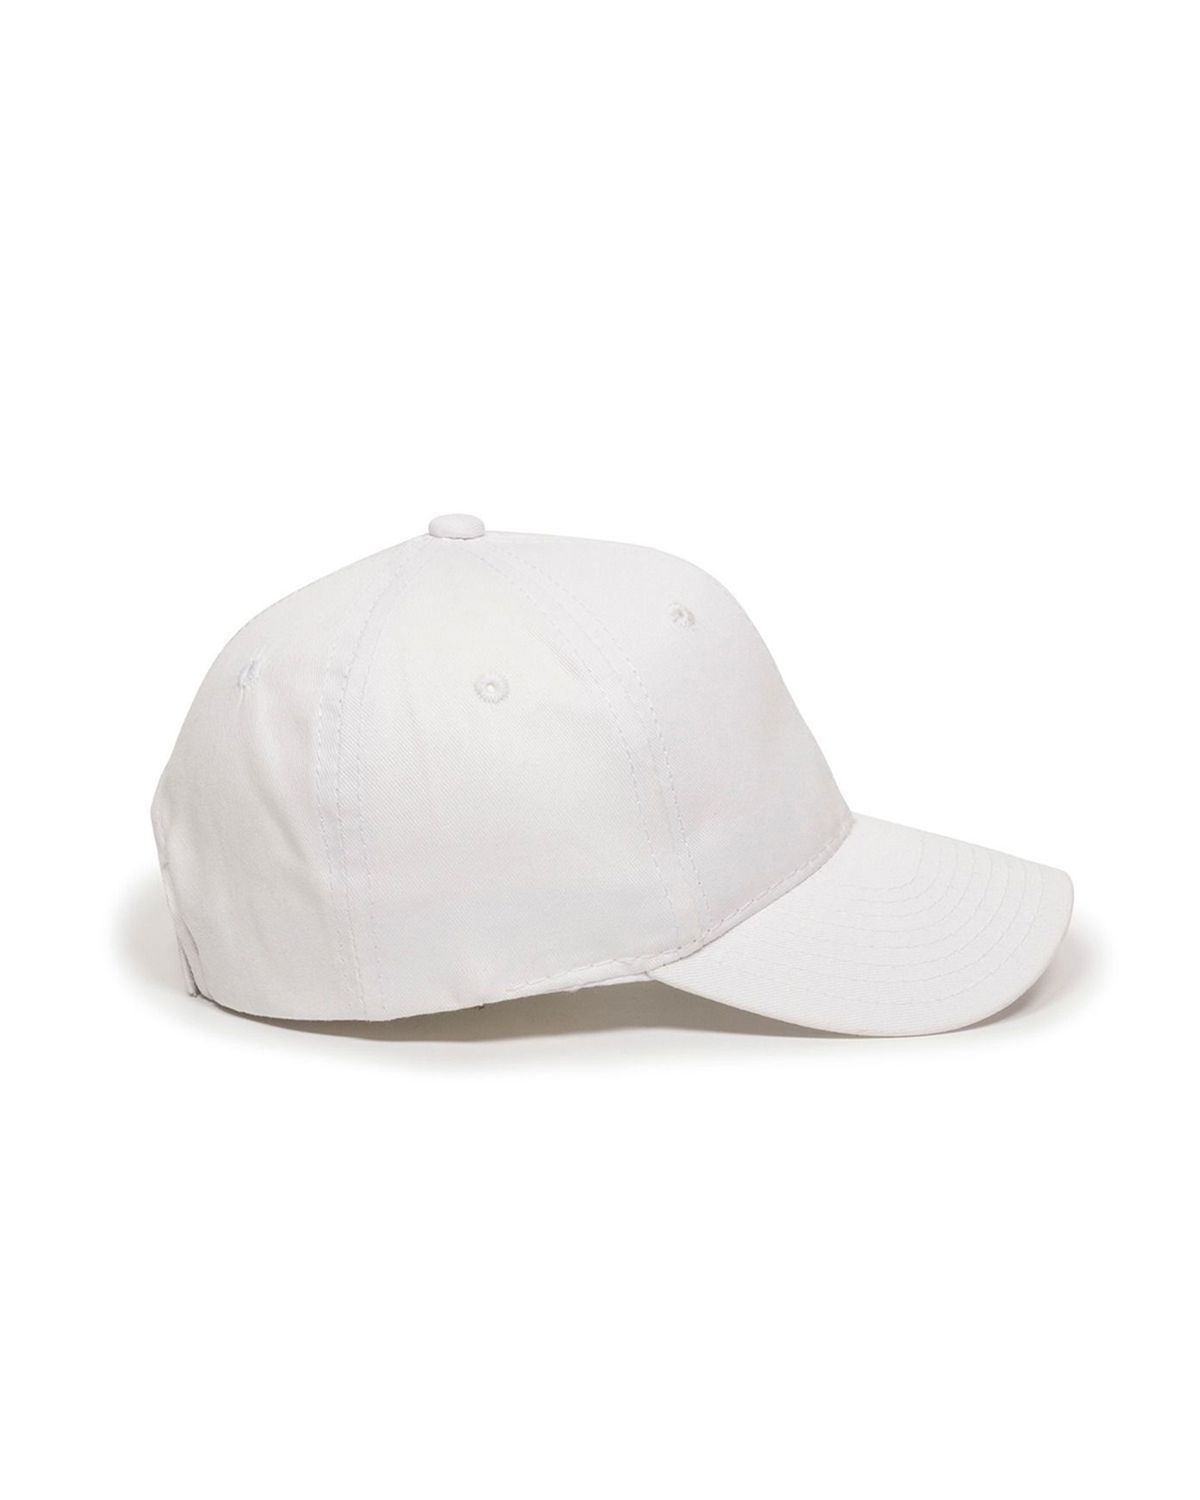 'Outdoor Cap GL-271 Cotton Twill Solid Back Cap'